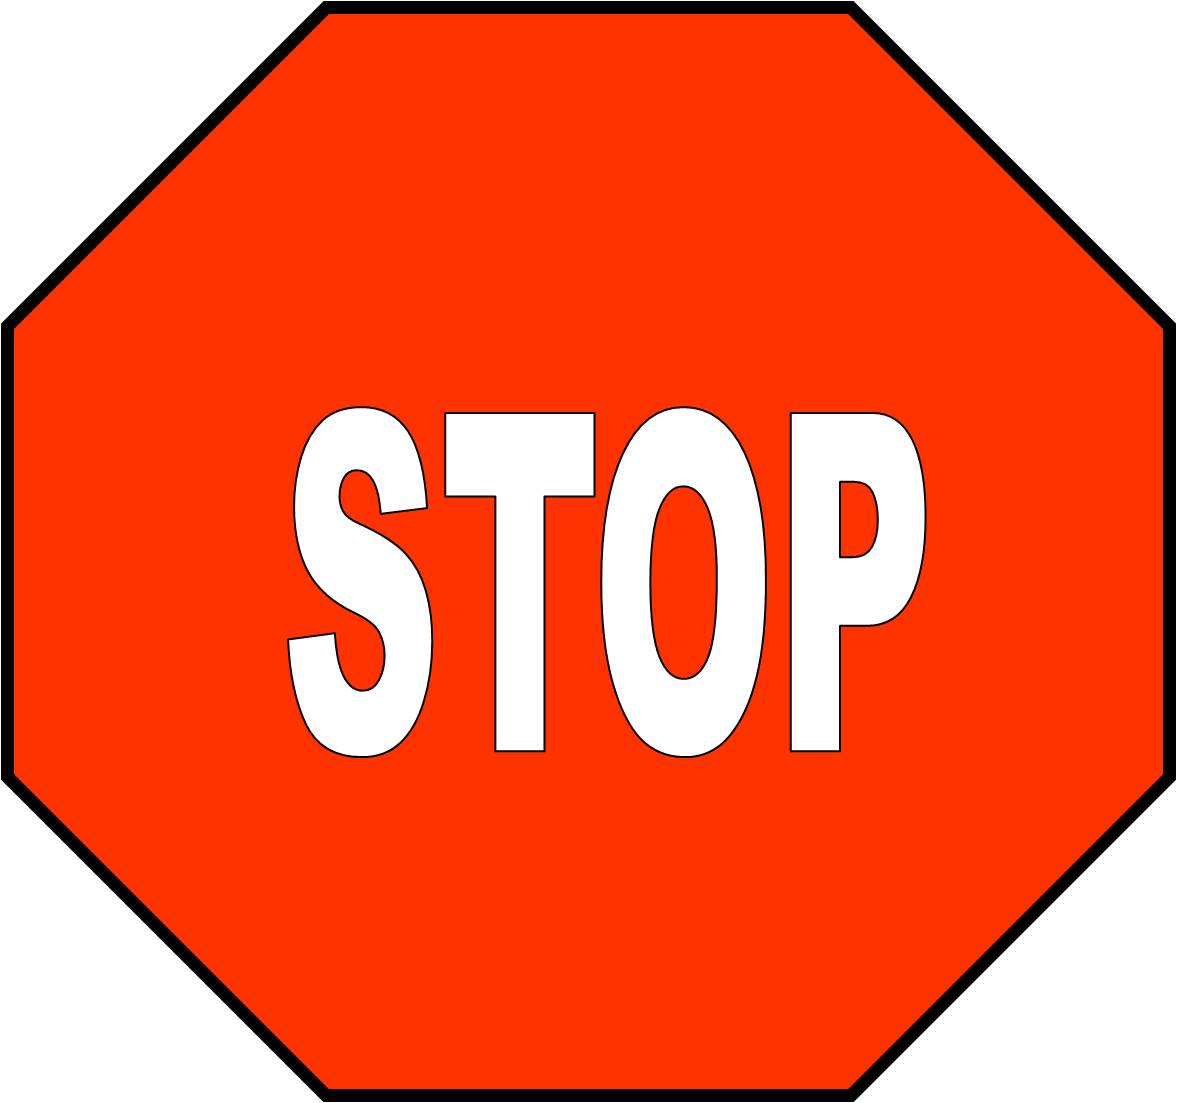 printable-stop-sign-clip-art